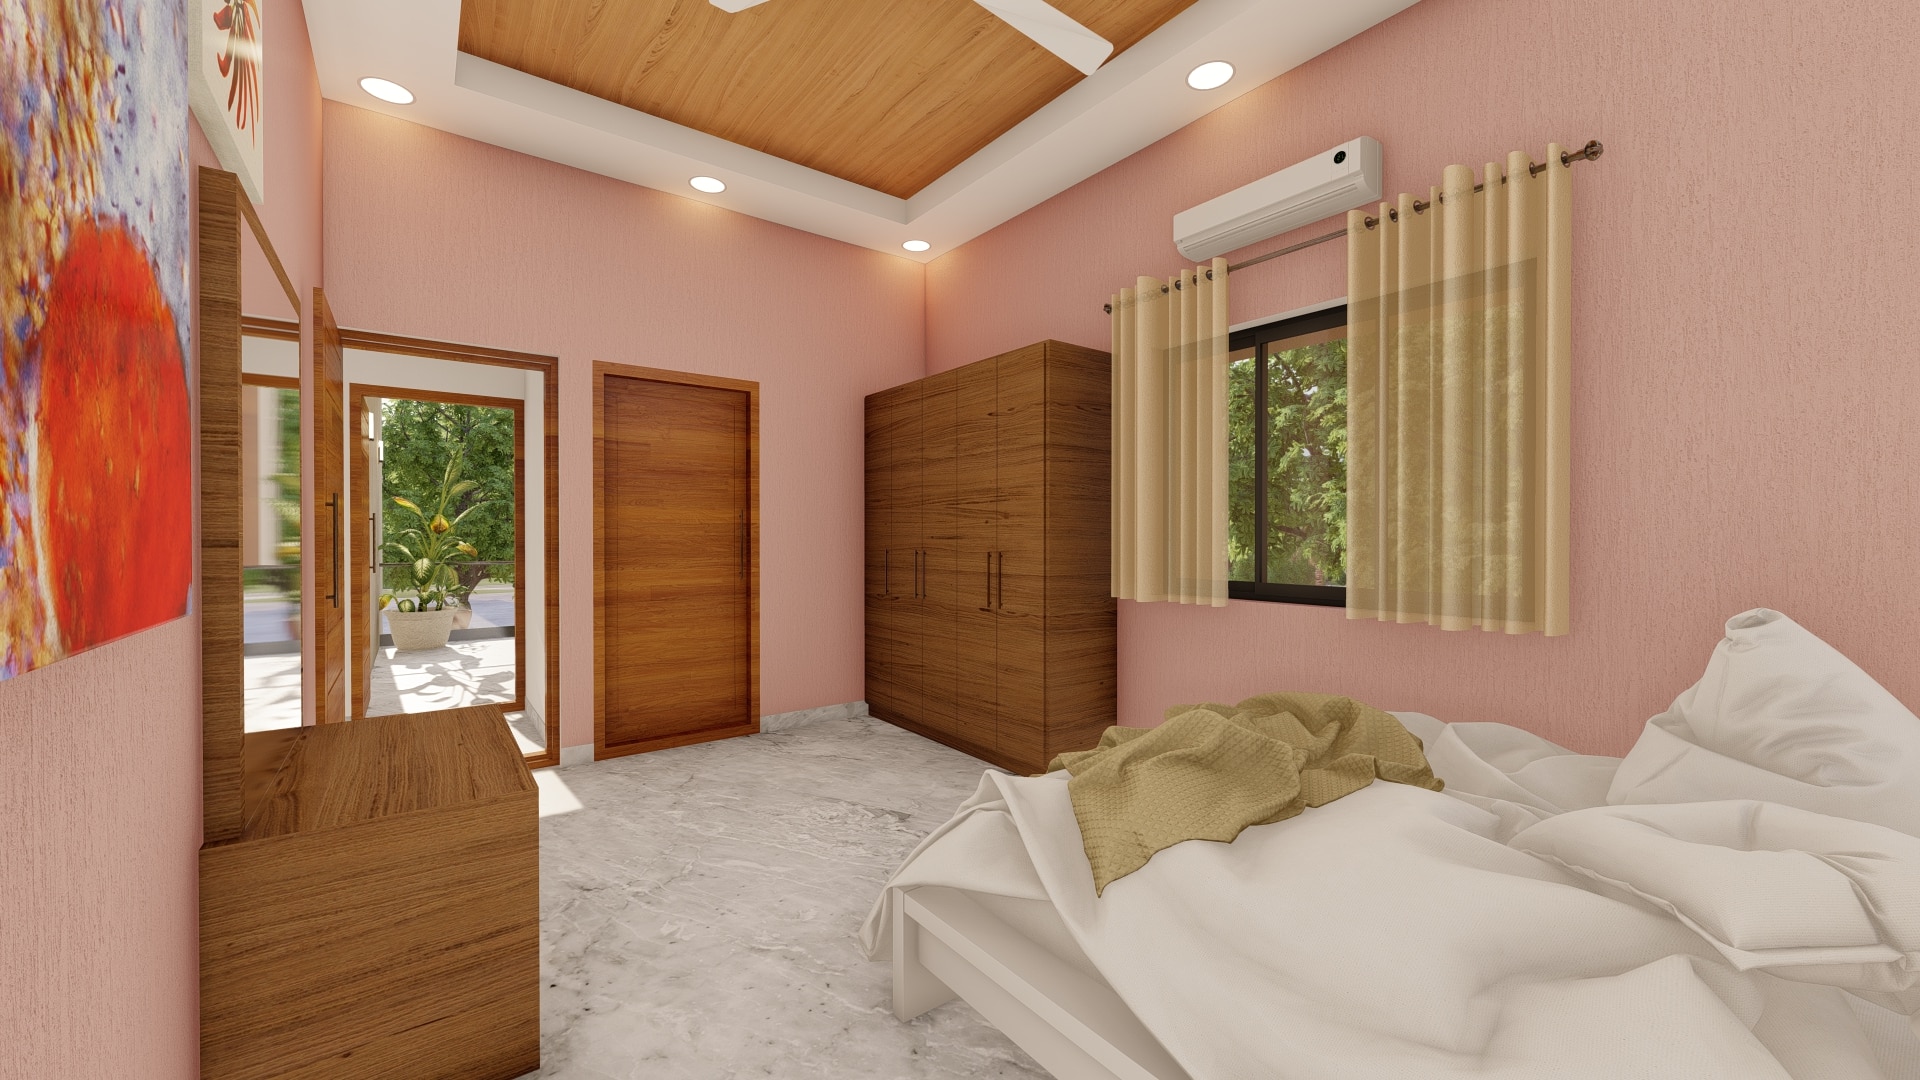 new villa construction floor plan bedroom by urban terrace west facing 1800 sq ft